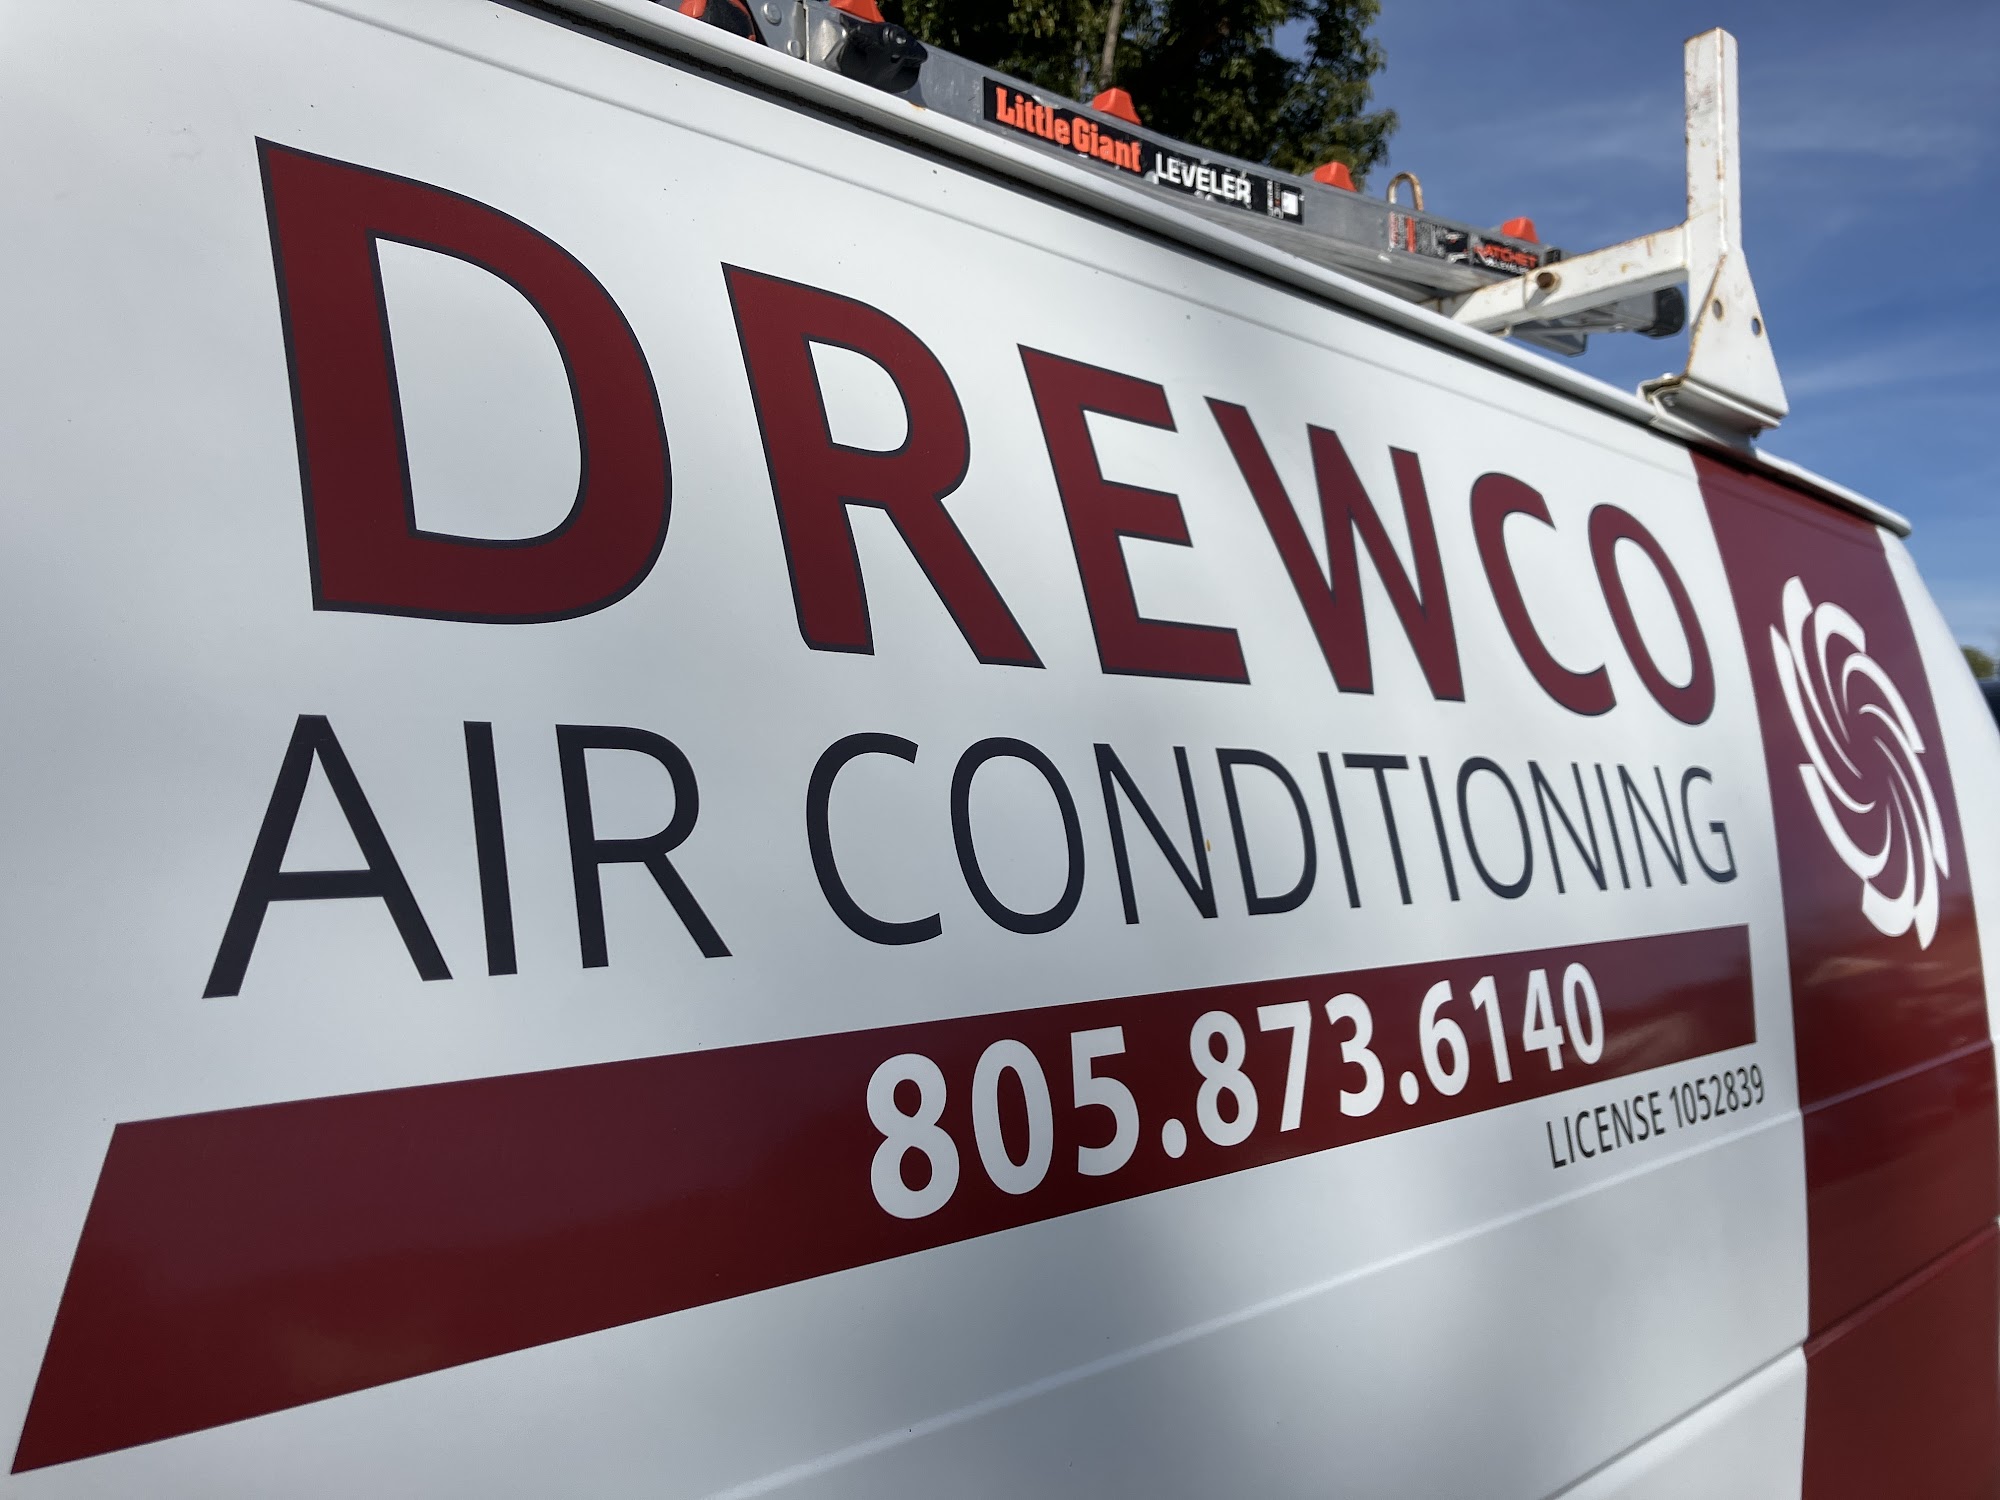 DrewCo Air Conditioning - HVAC Contractor.